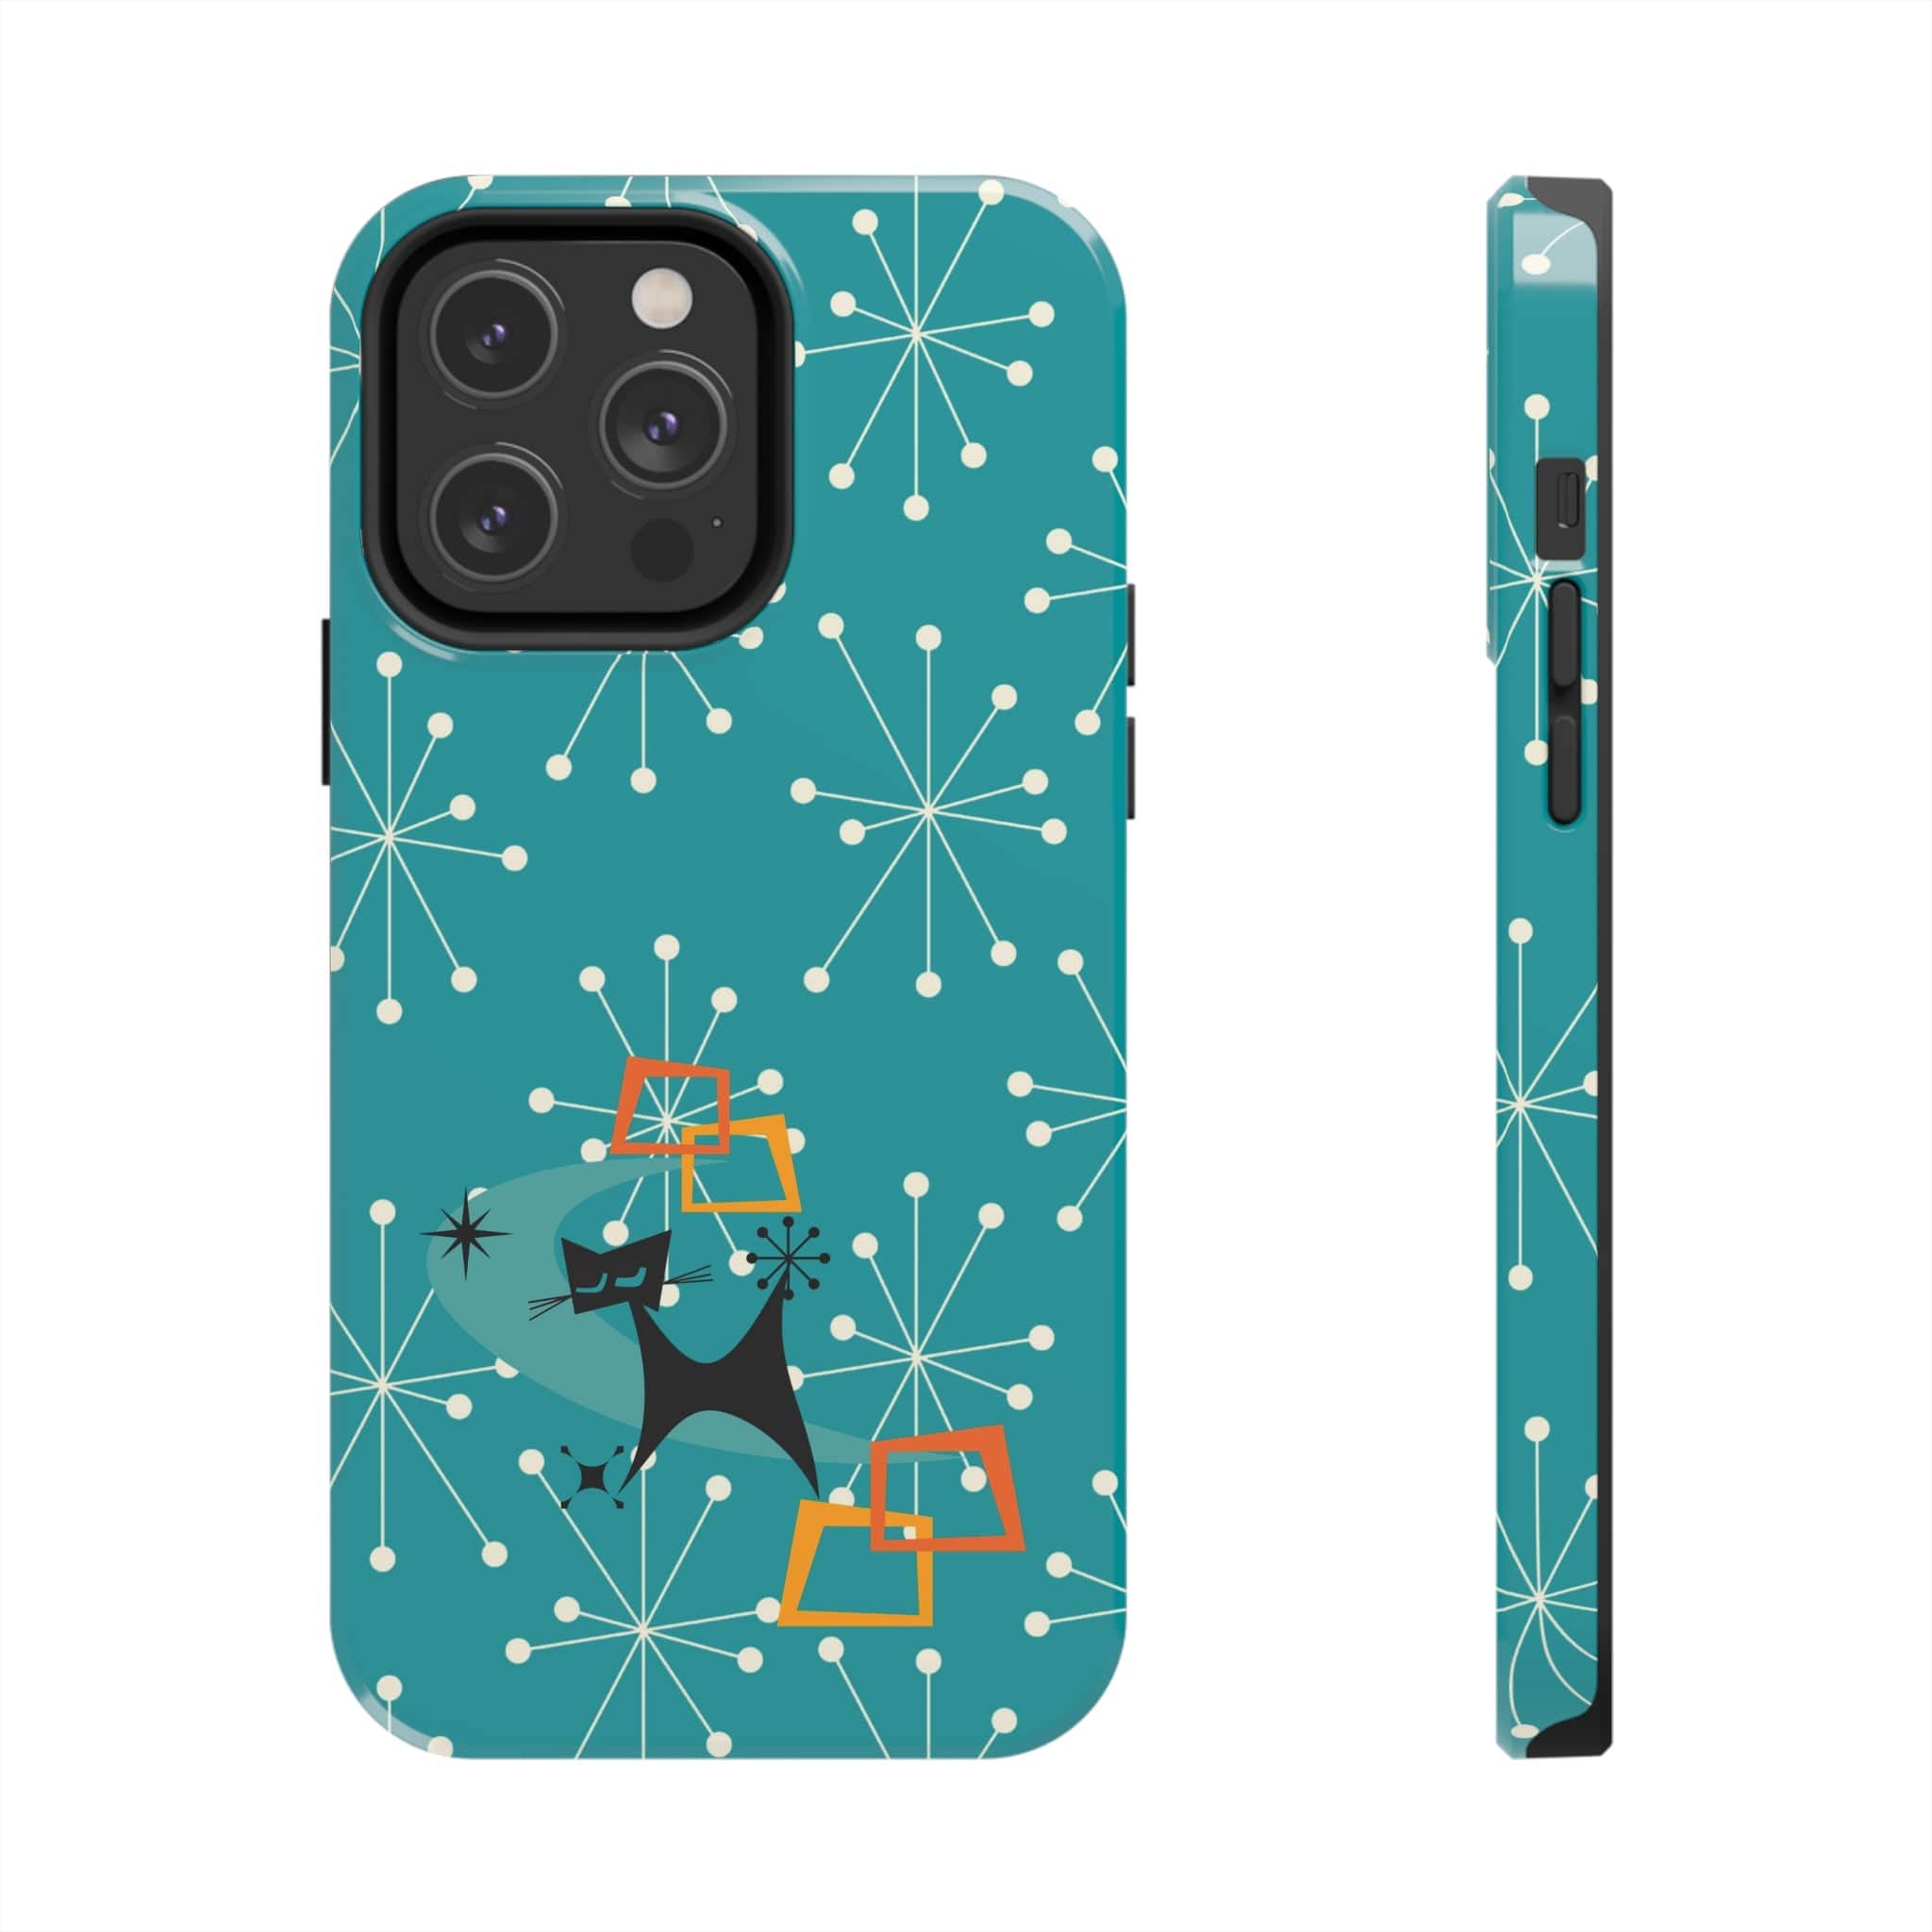 Atomic Space Cat, Starburst Blue, Retro Groovy Smart Phone Tough Phone Cases Phone Case